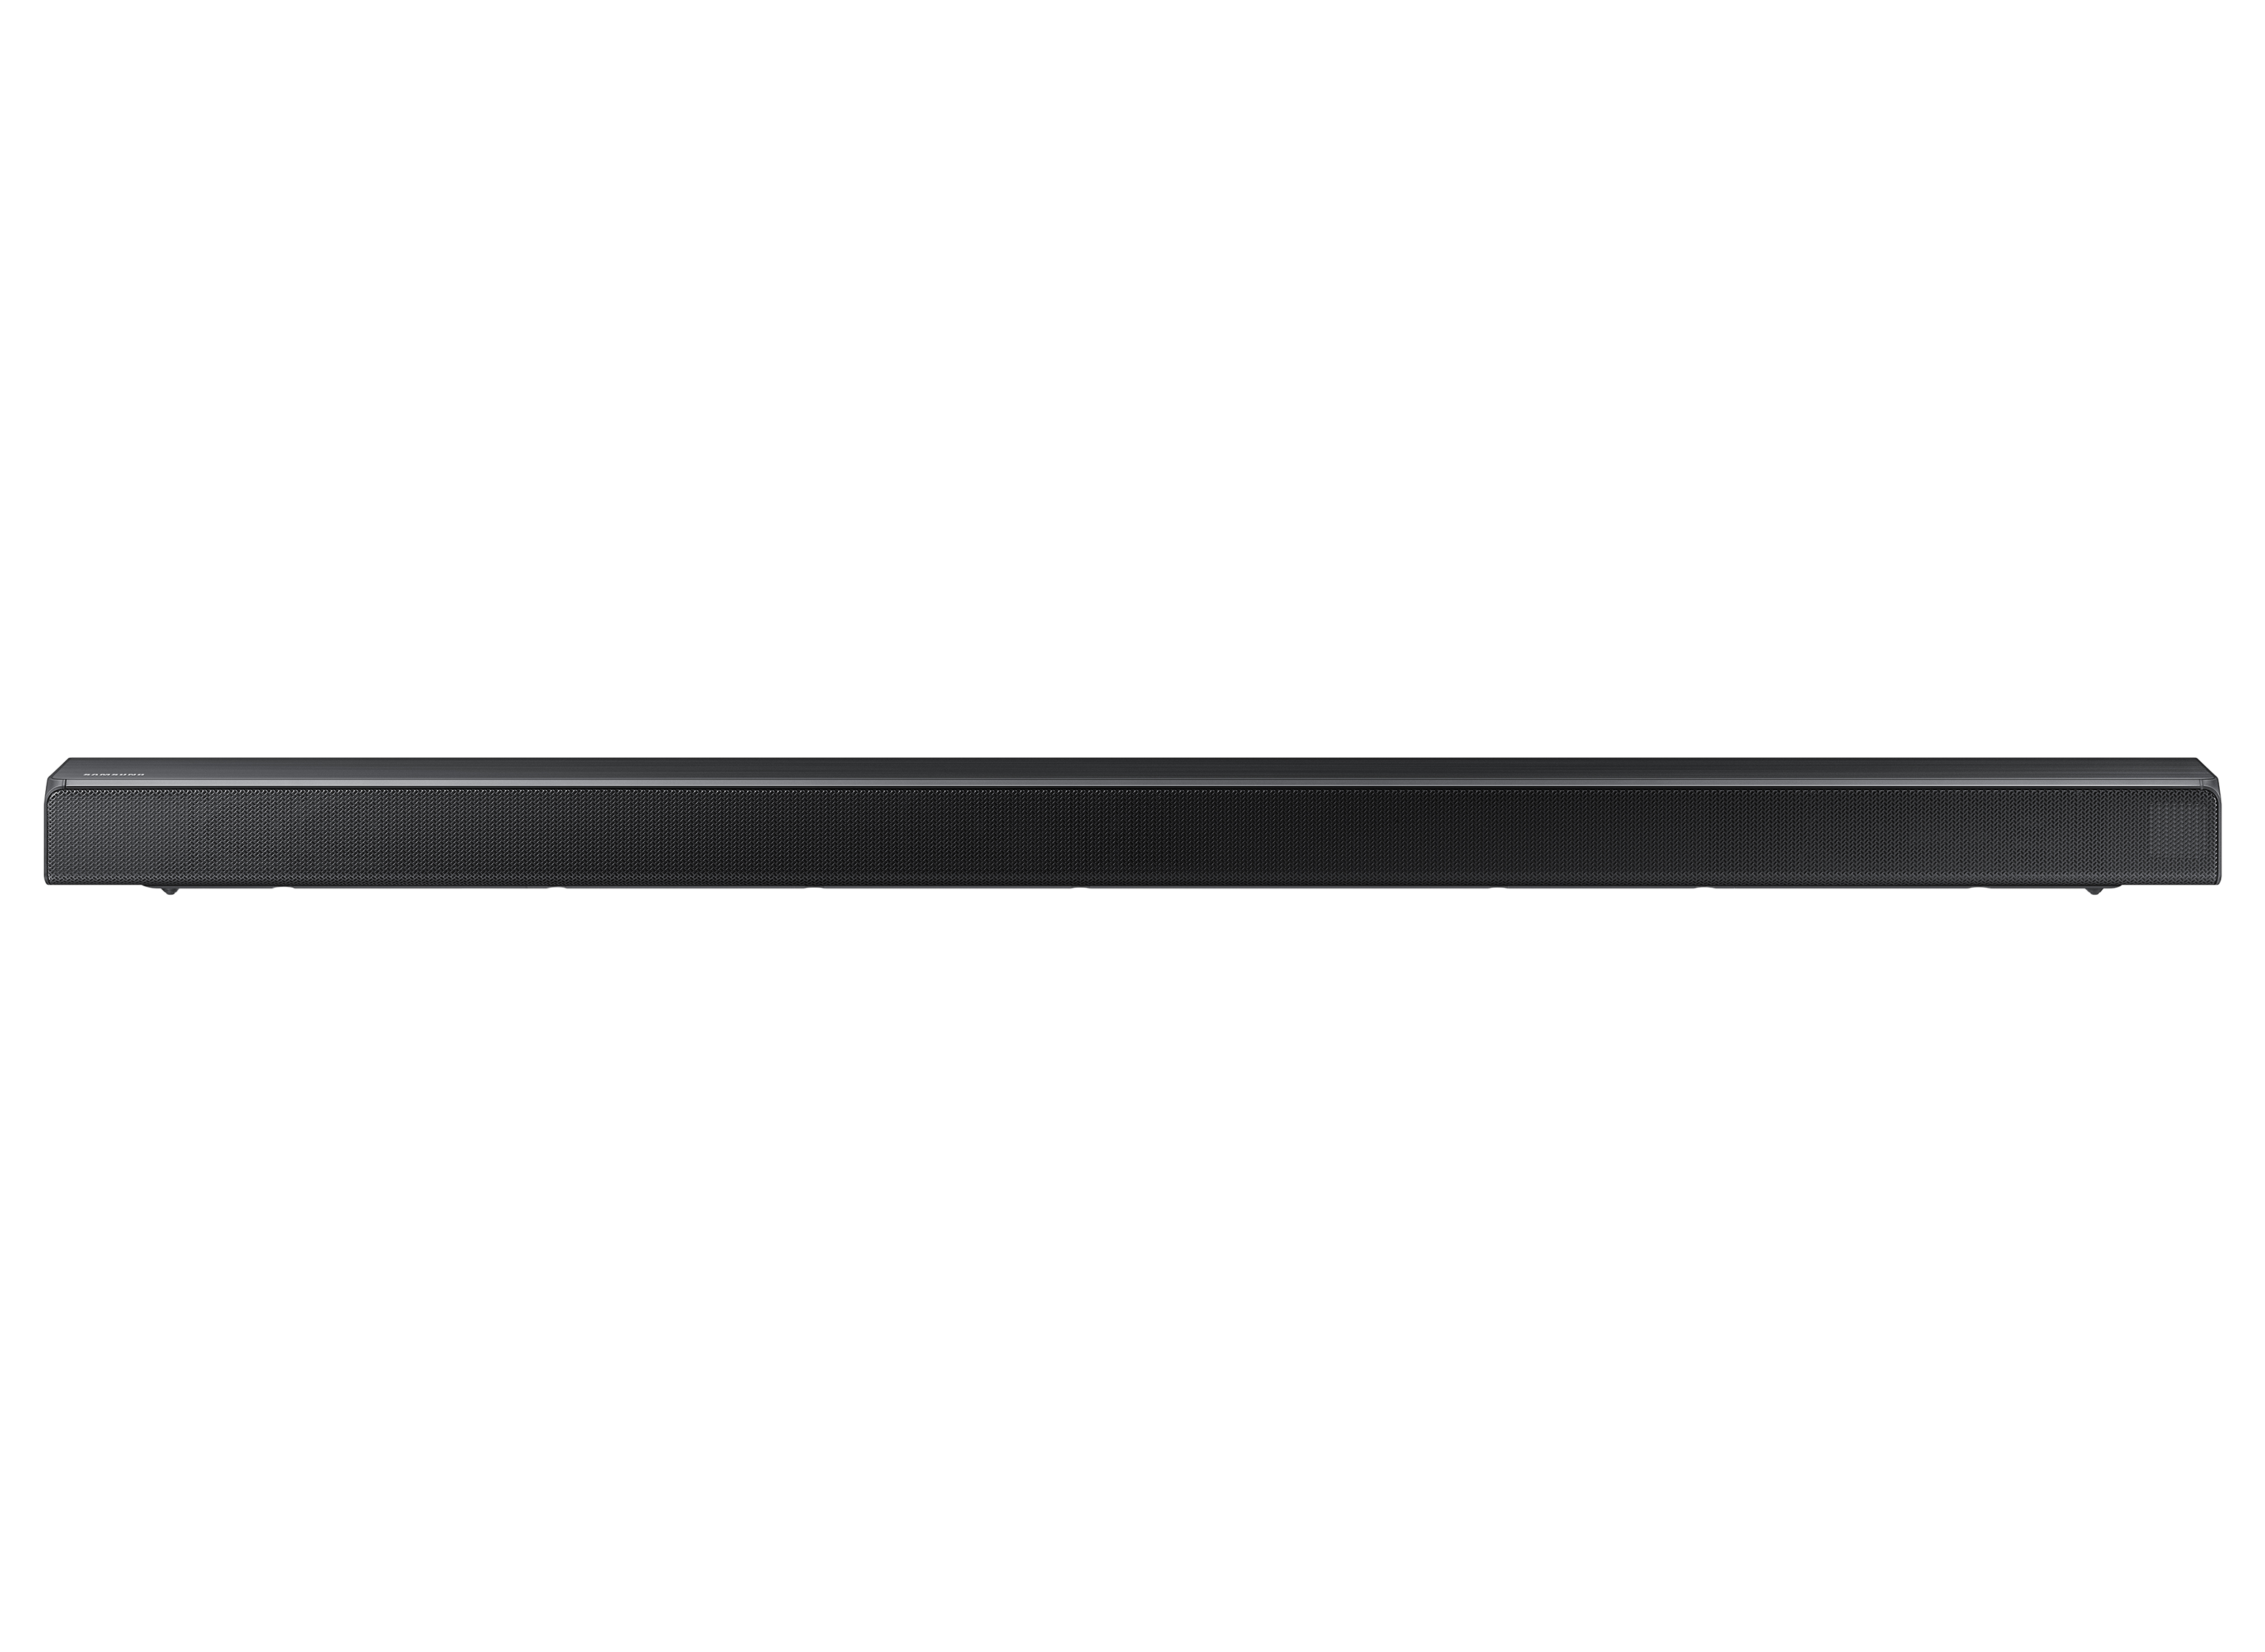 desire erection Badly Samsung HW-R650 Soundbar Review - Consumer Reports